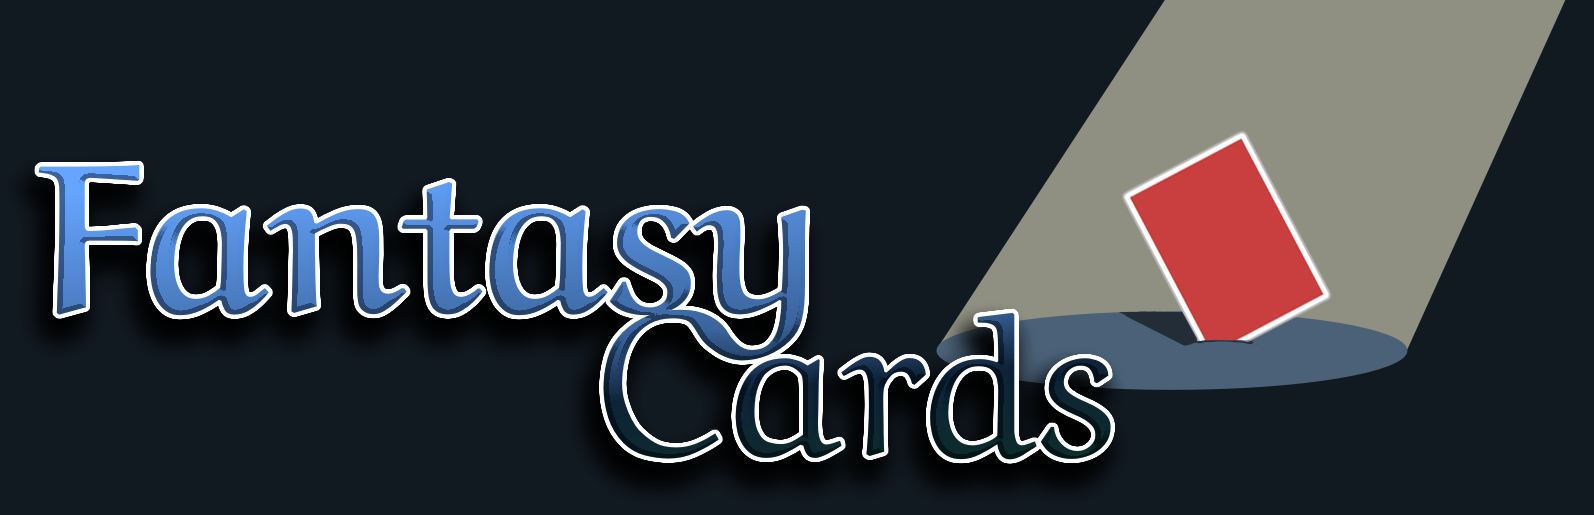 Fantasy Cards